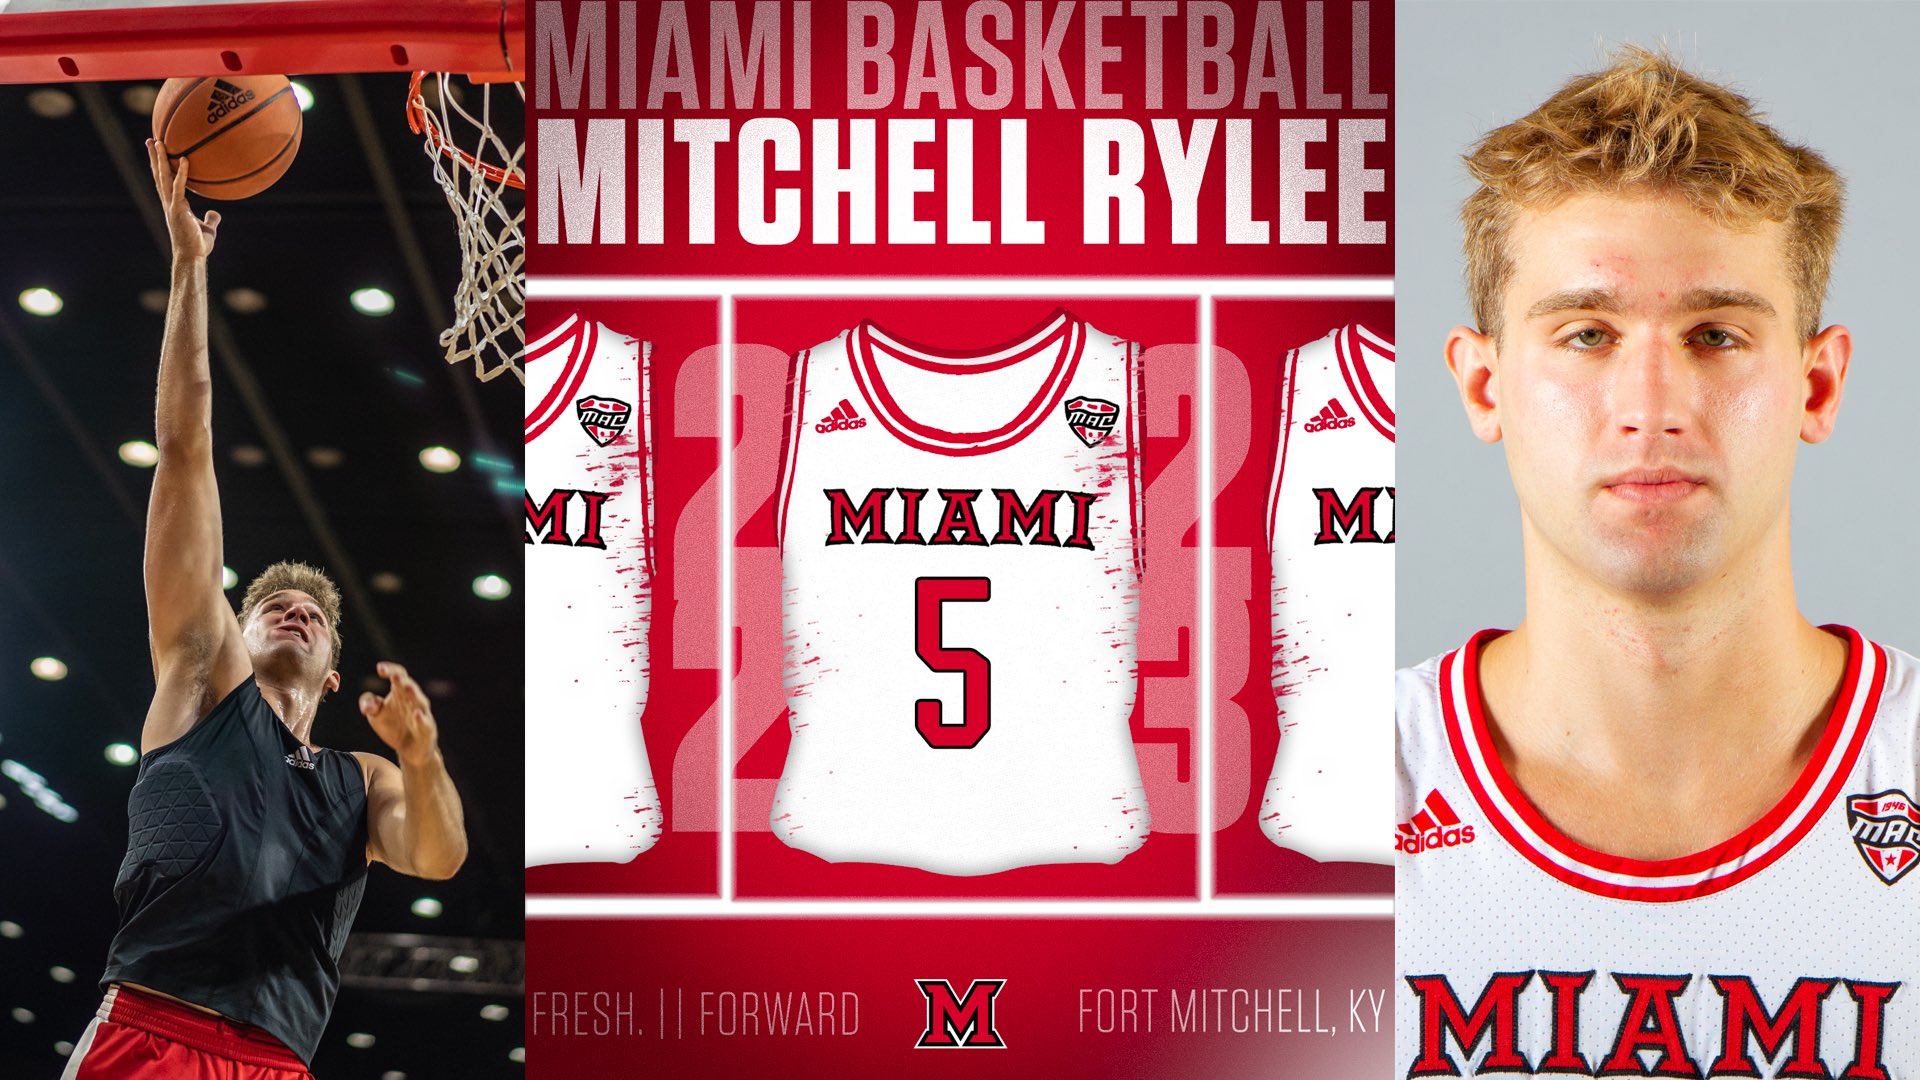 Mitchell Rylee - Men's Basketball - Miami University RedHawks